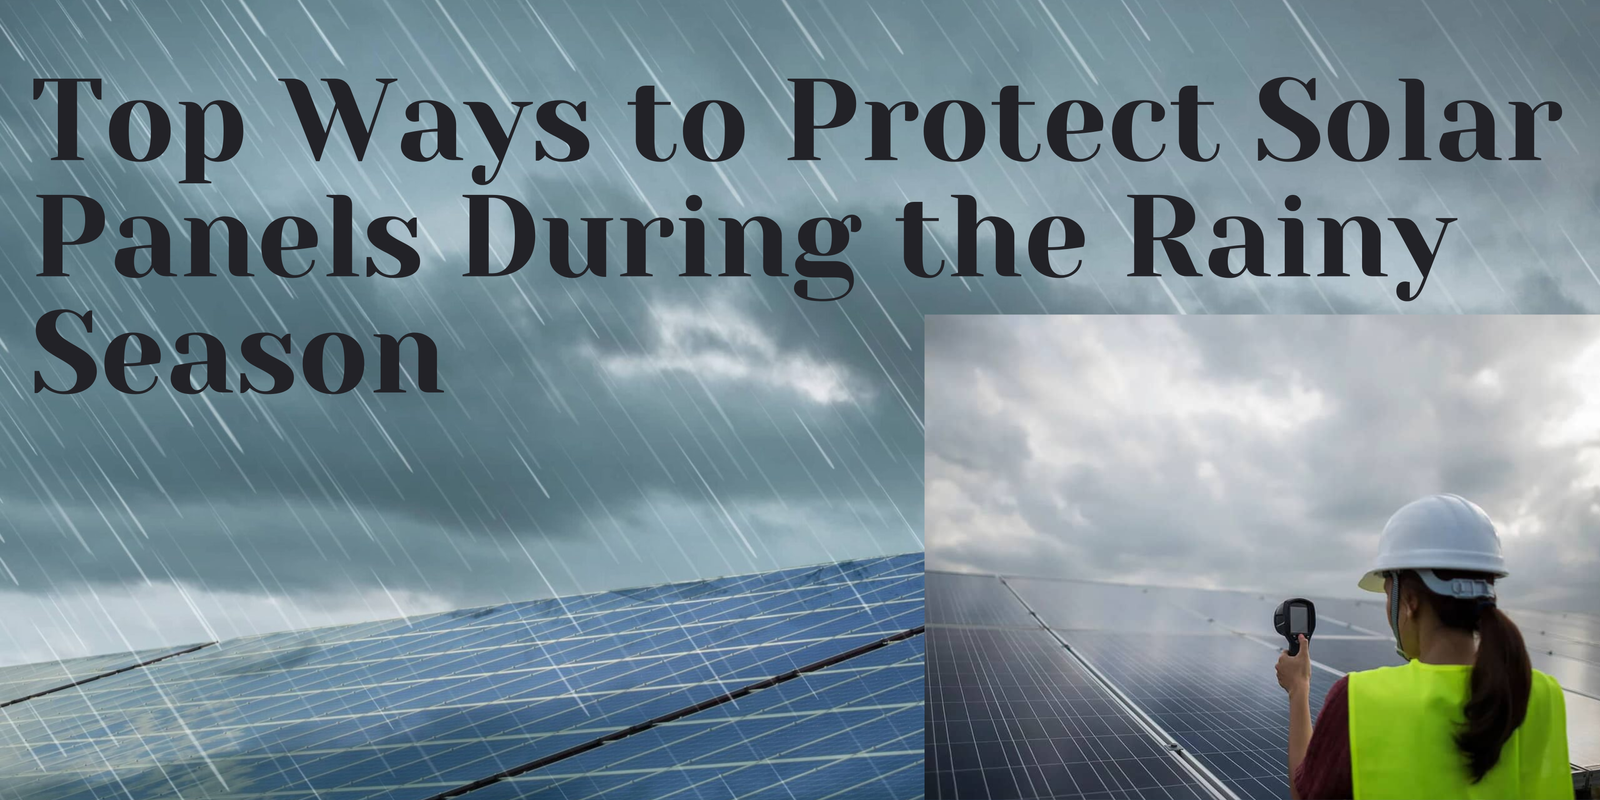 Top Ways to Protect Solar Panels During the Rainy Season